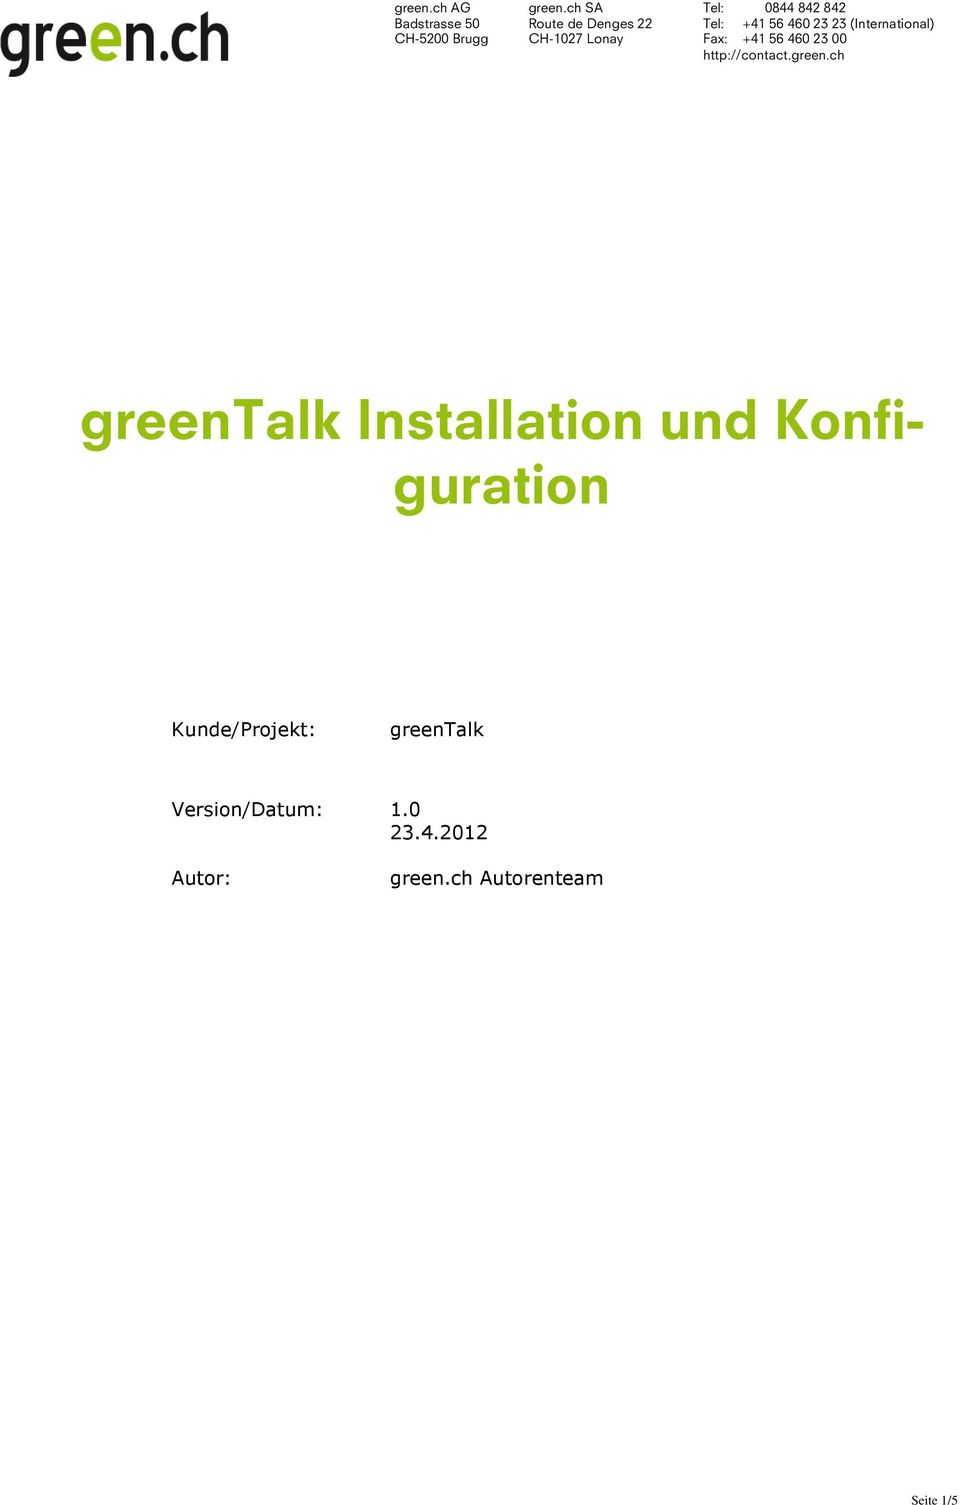 greentalk Version/Datum: 1.0 23.